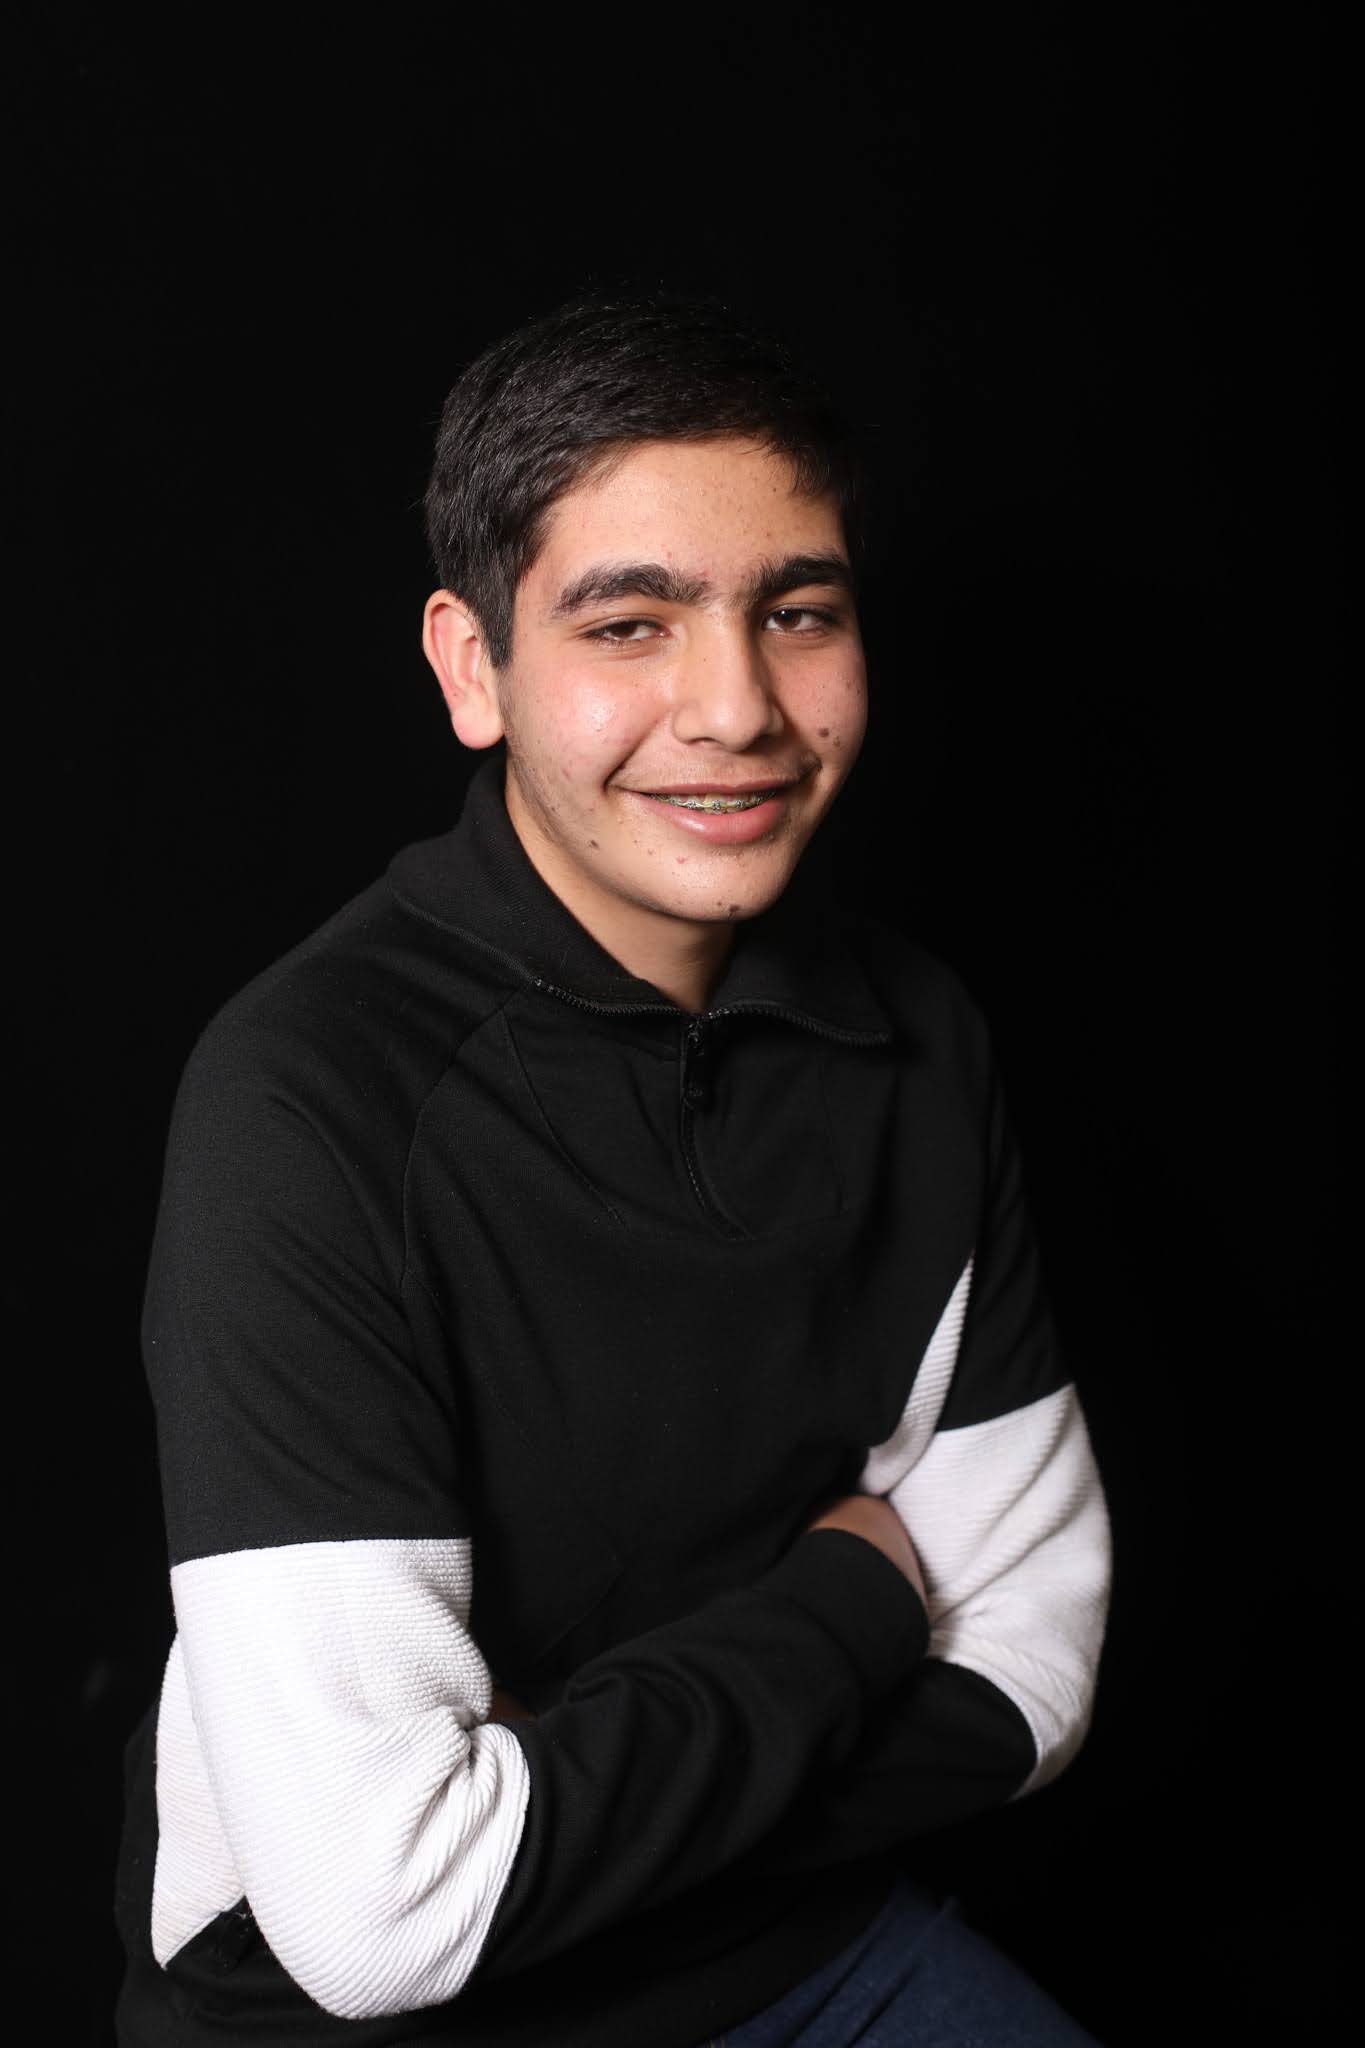 Sadaqat Khan - Worcester Technical High School - Sophomore - Youth Leader